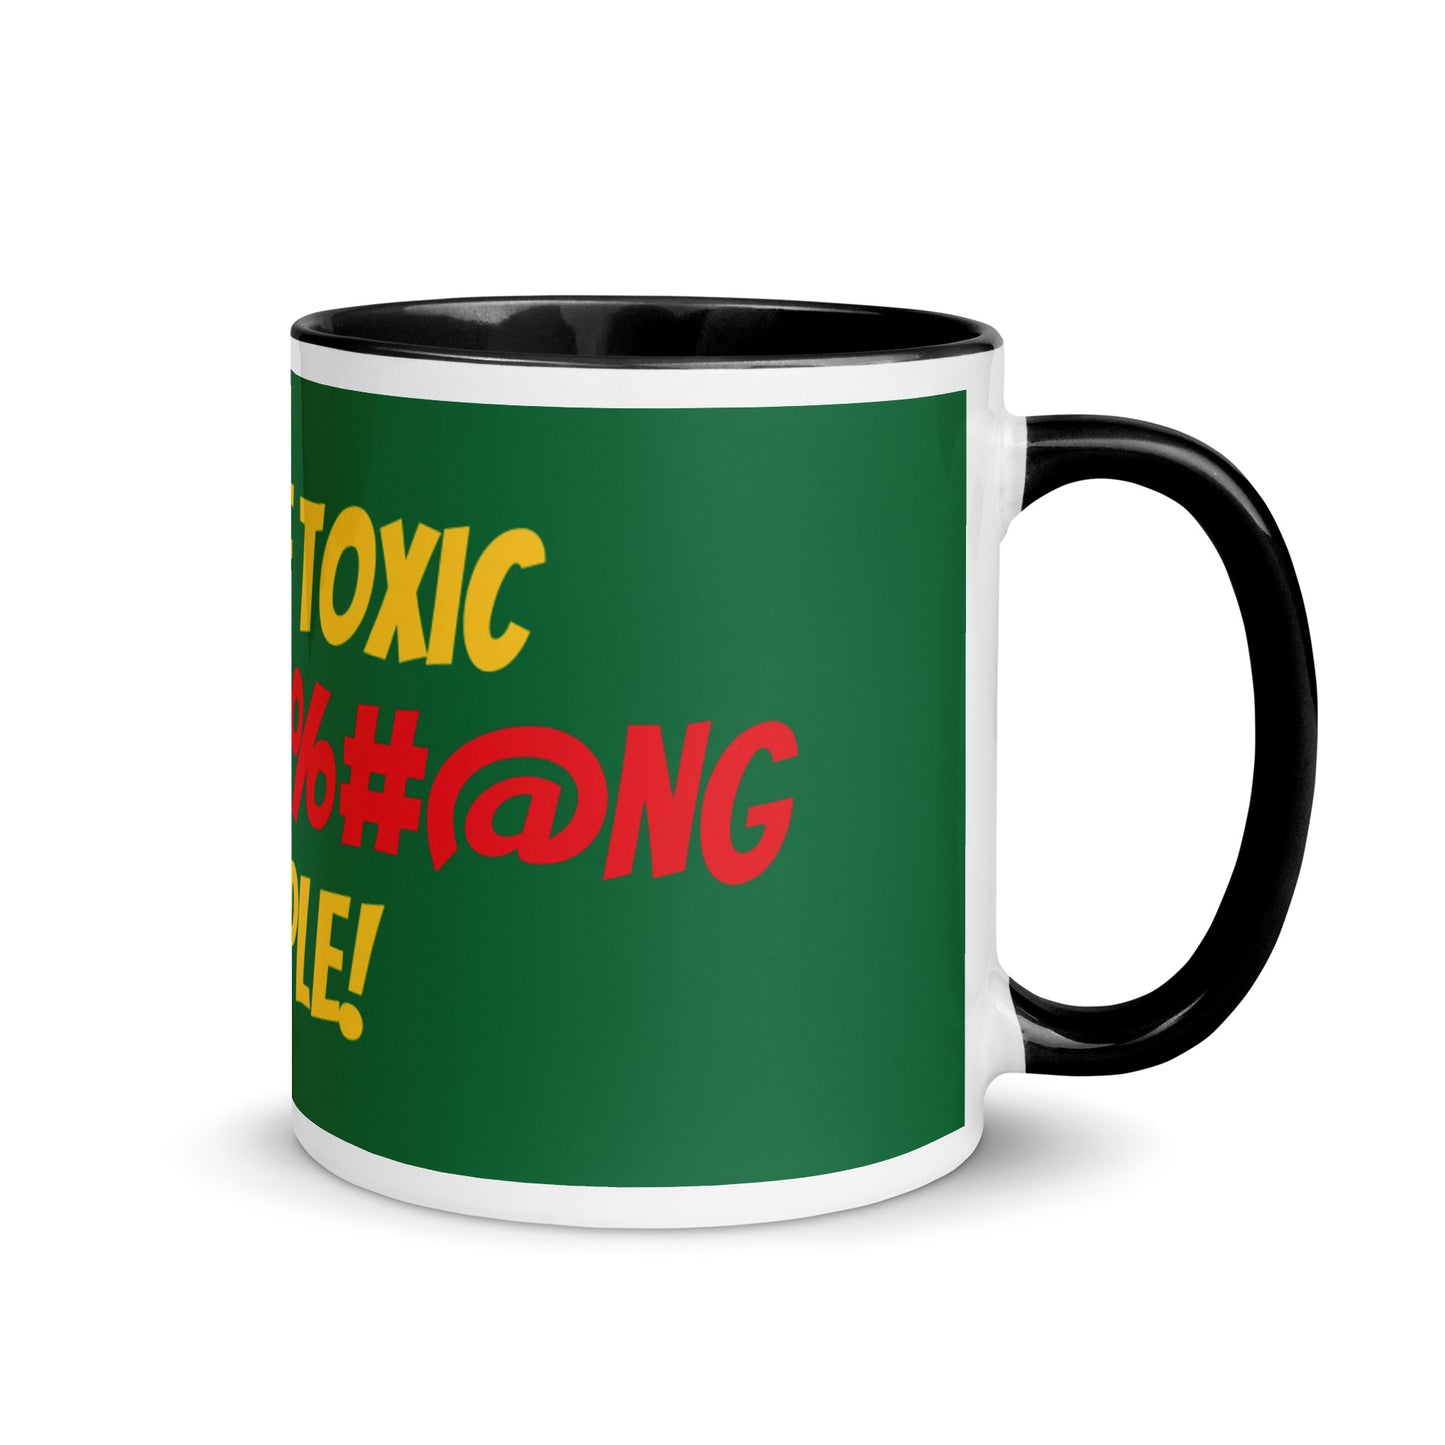 Jewel Color Mug - Free of toxic #$% people!